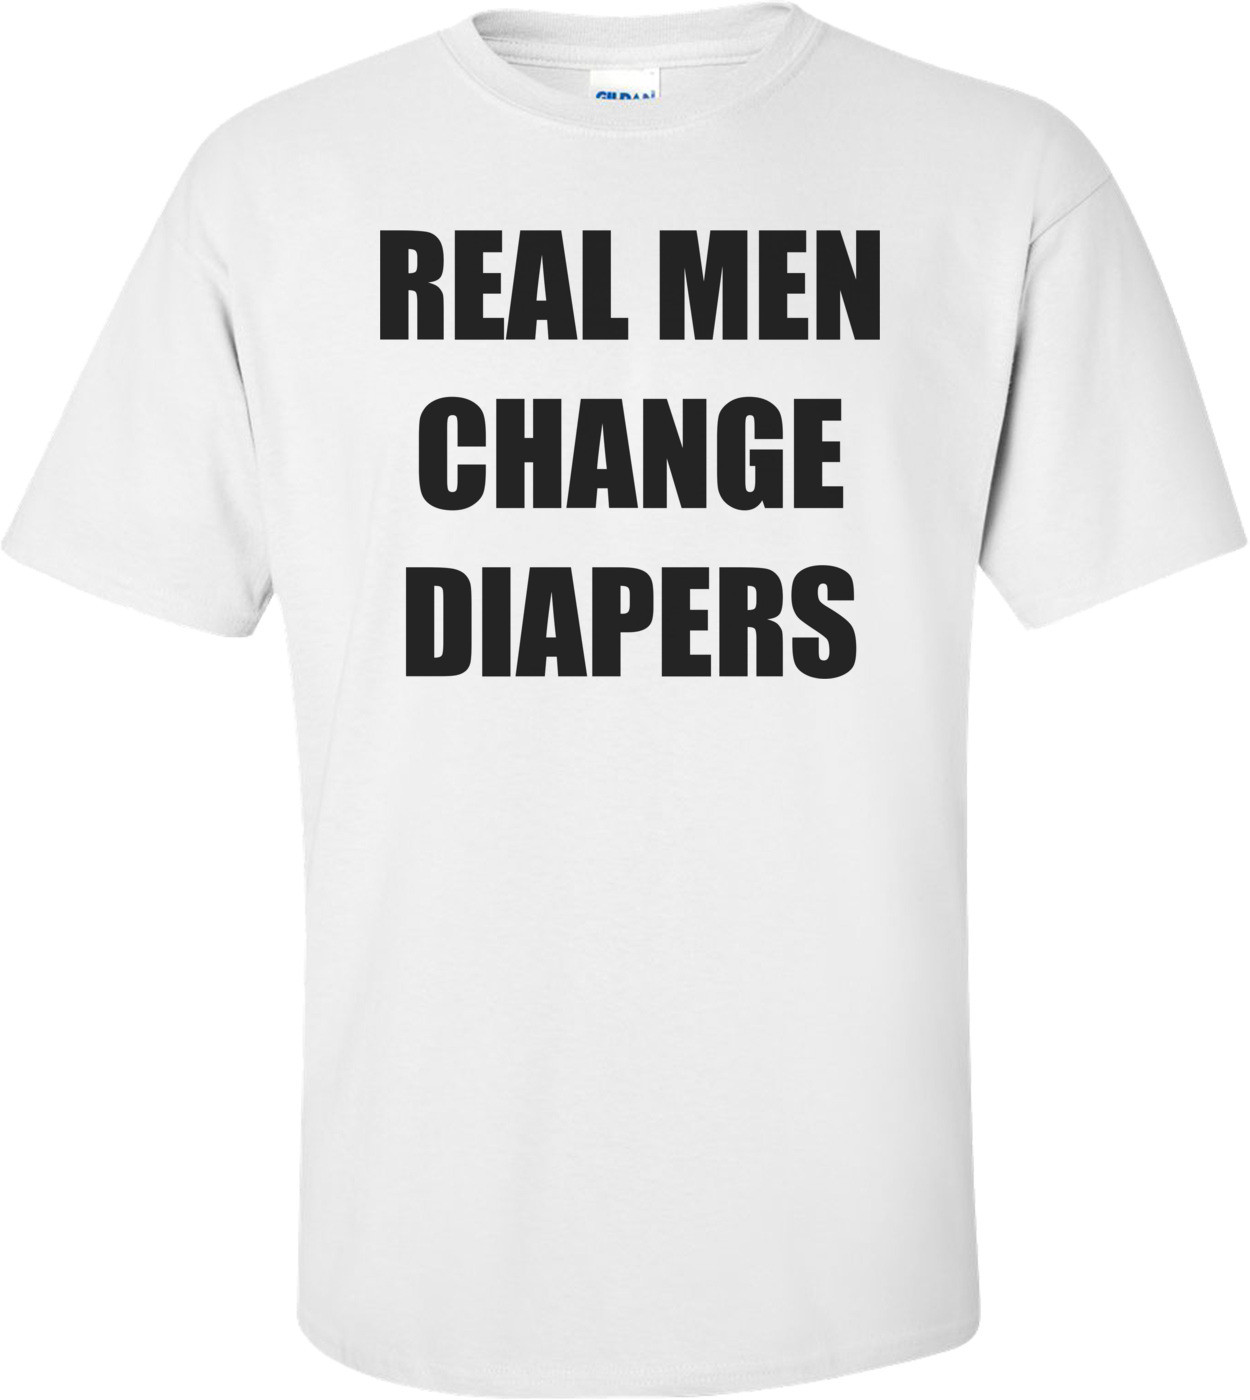 REAL MEN CHANGE DIAPERS Shirt